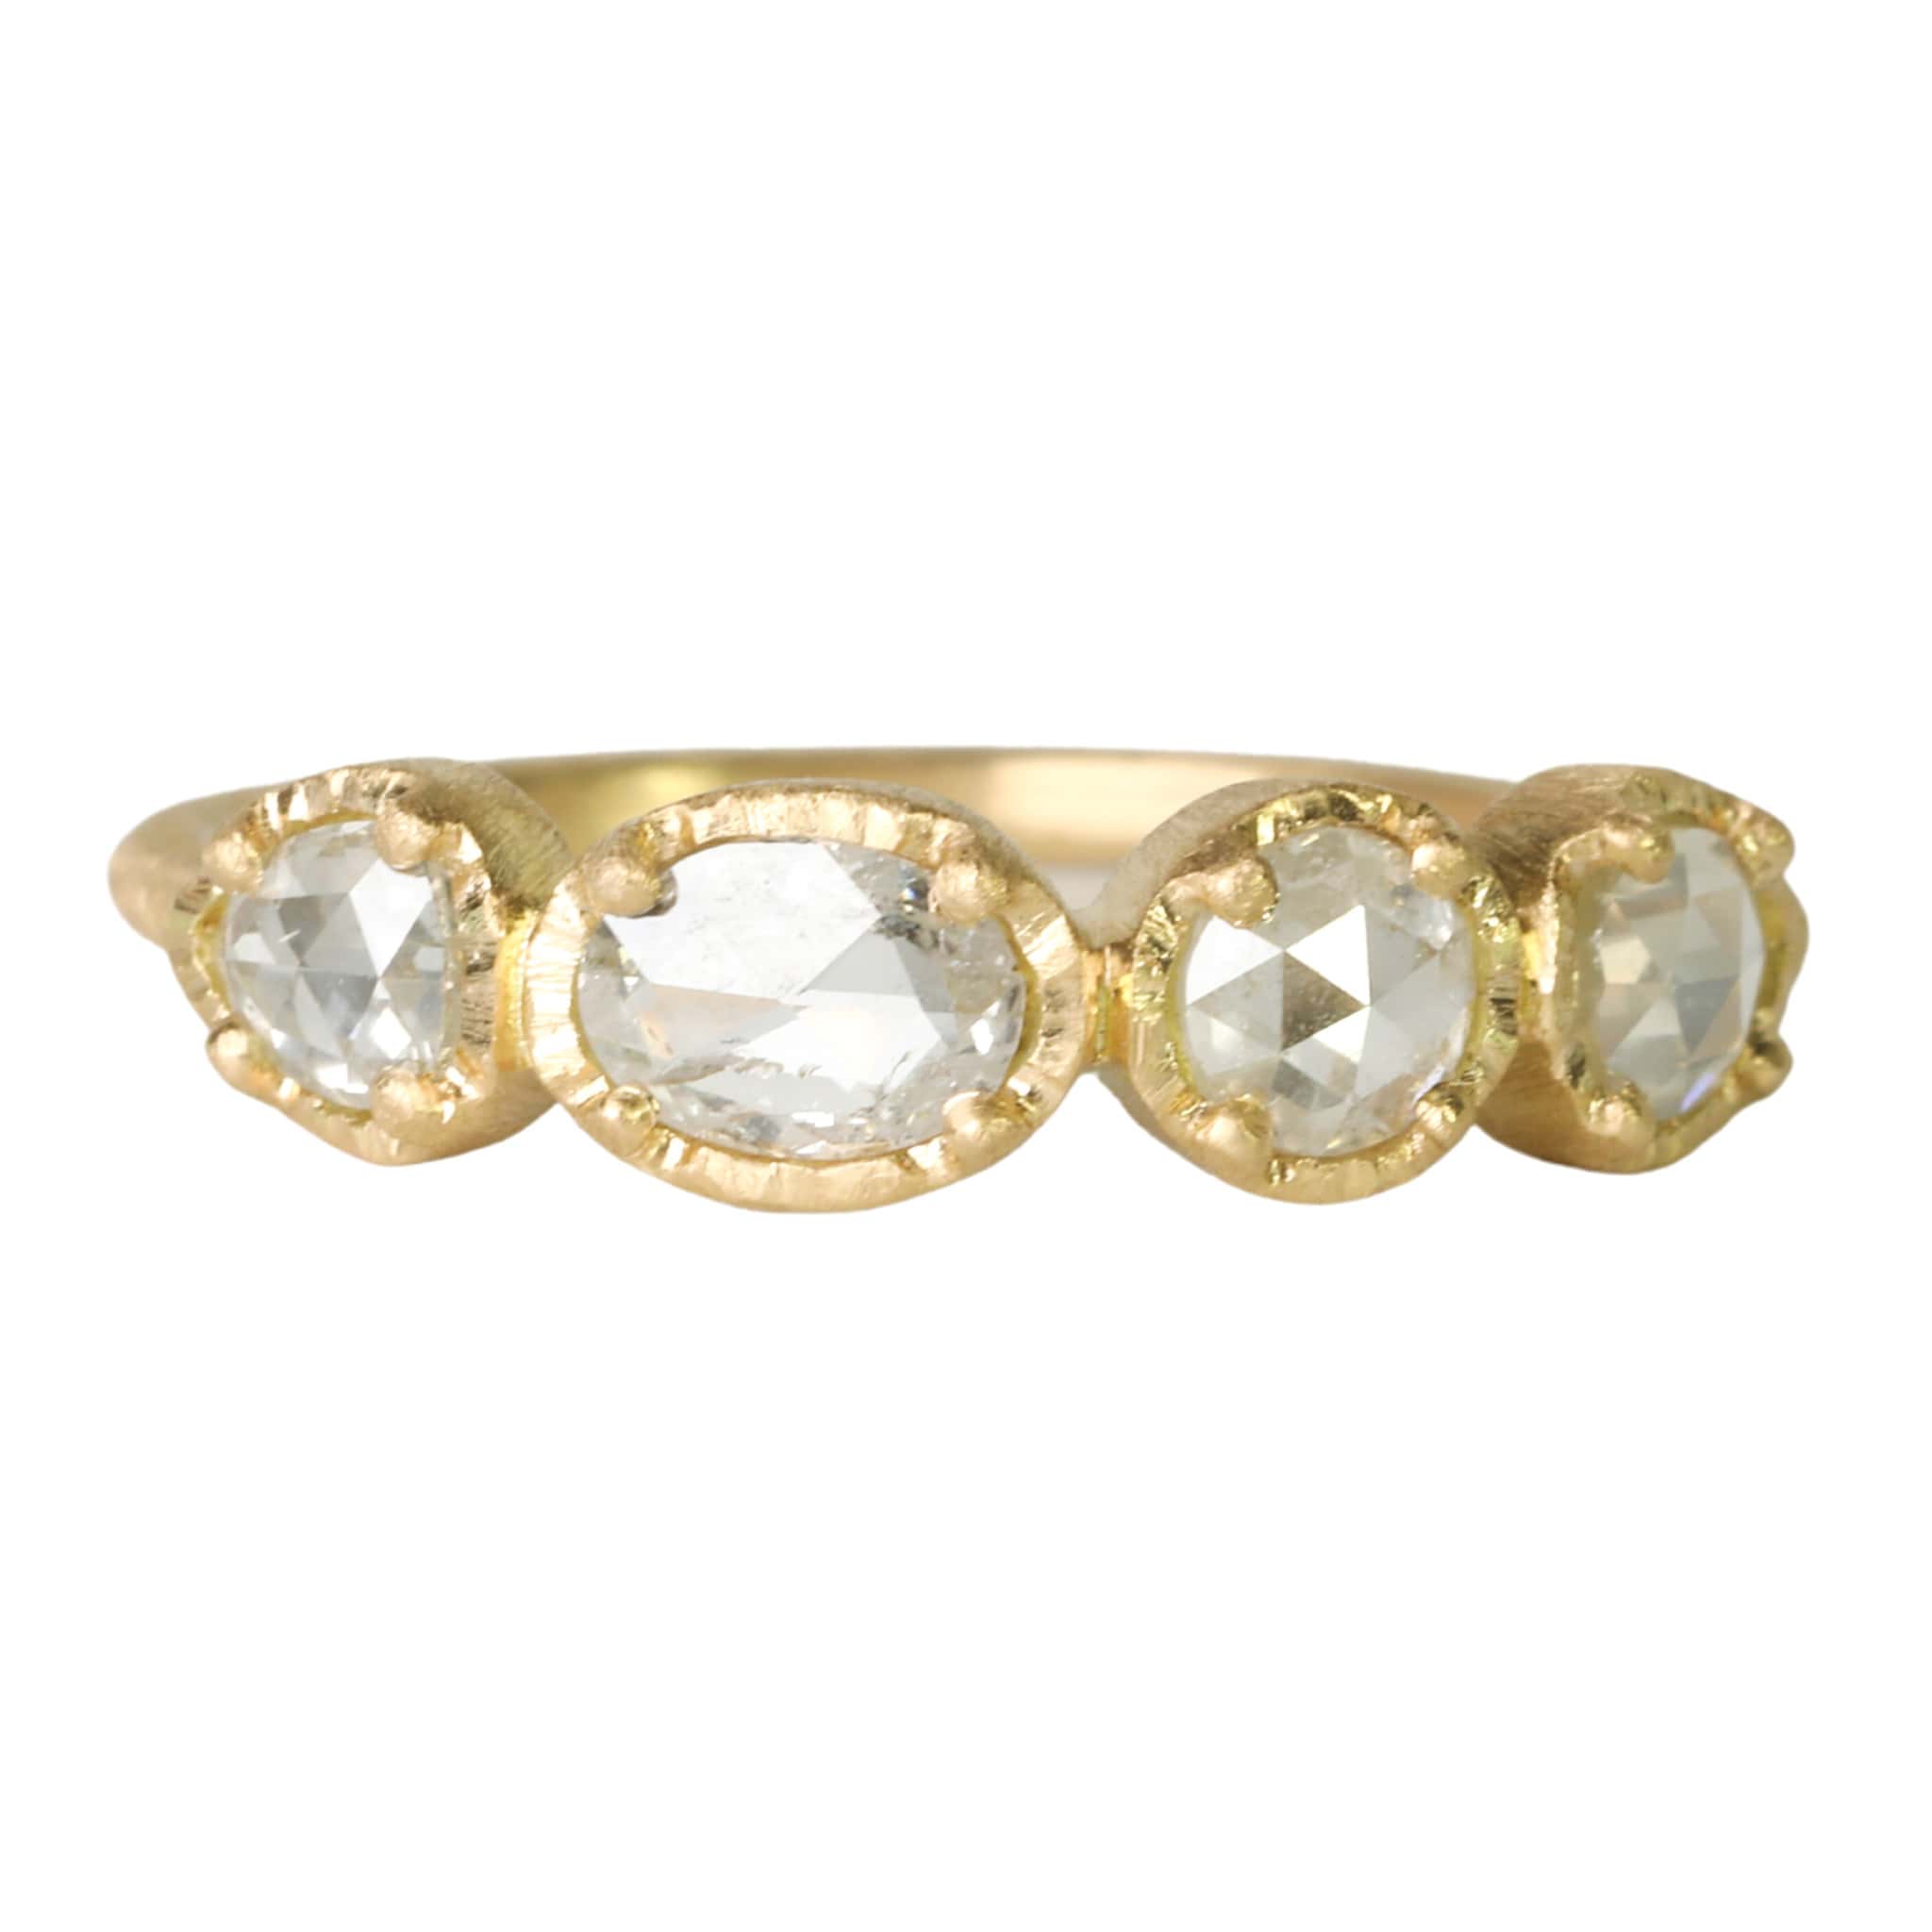 Yasuko Azuma 18K Gold Ring with Four Prong-Set Colorless Diamonds